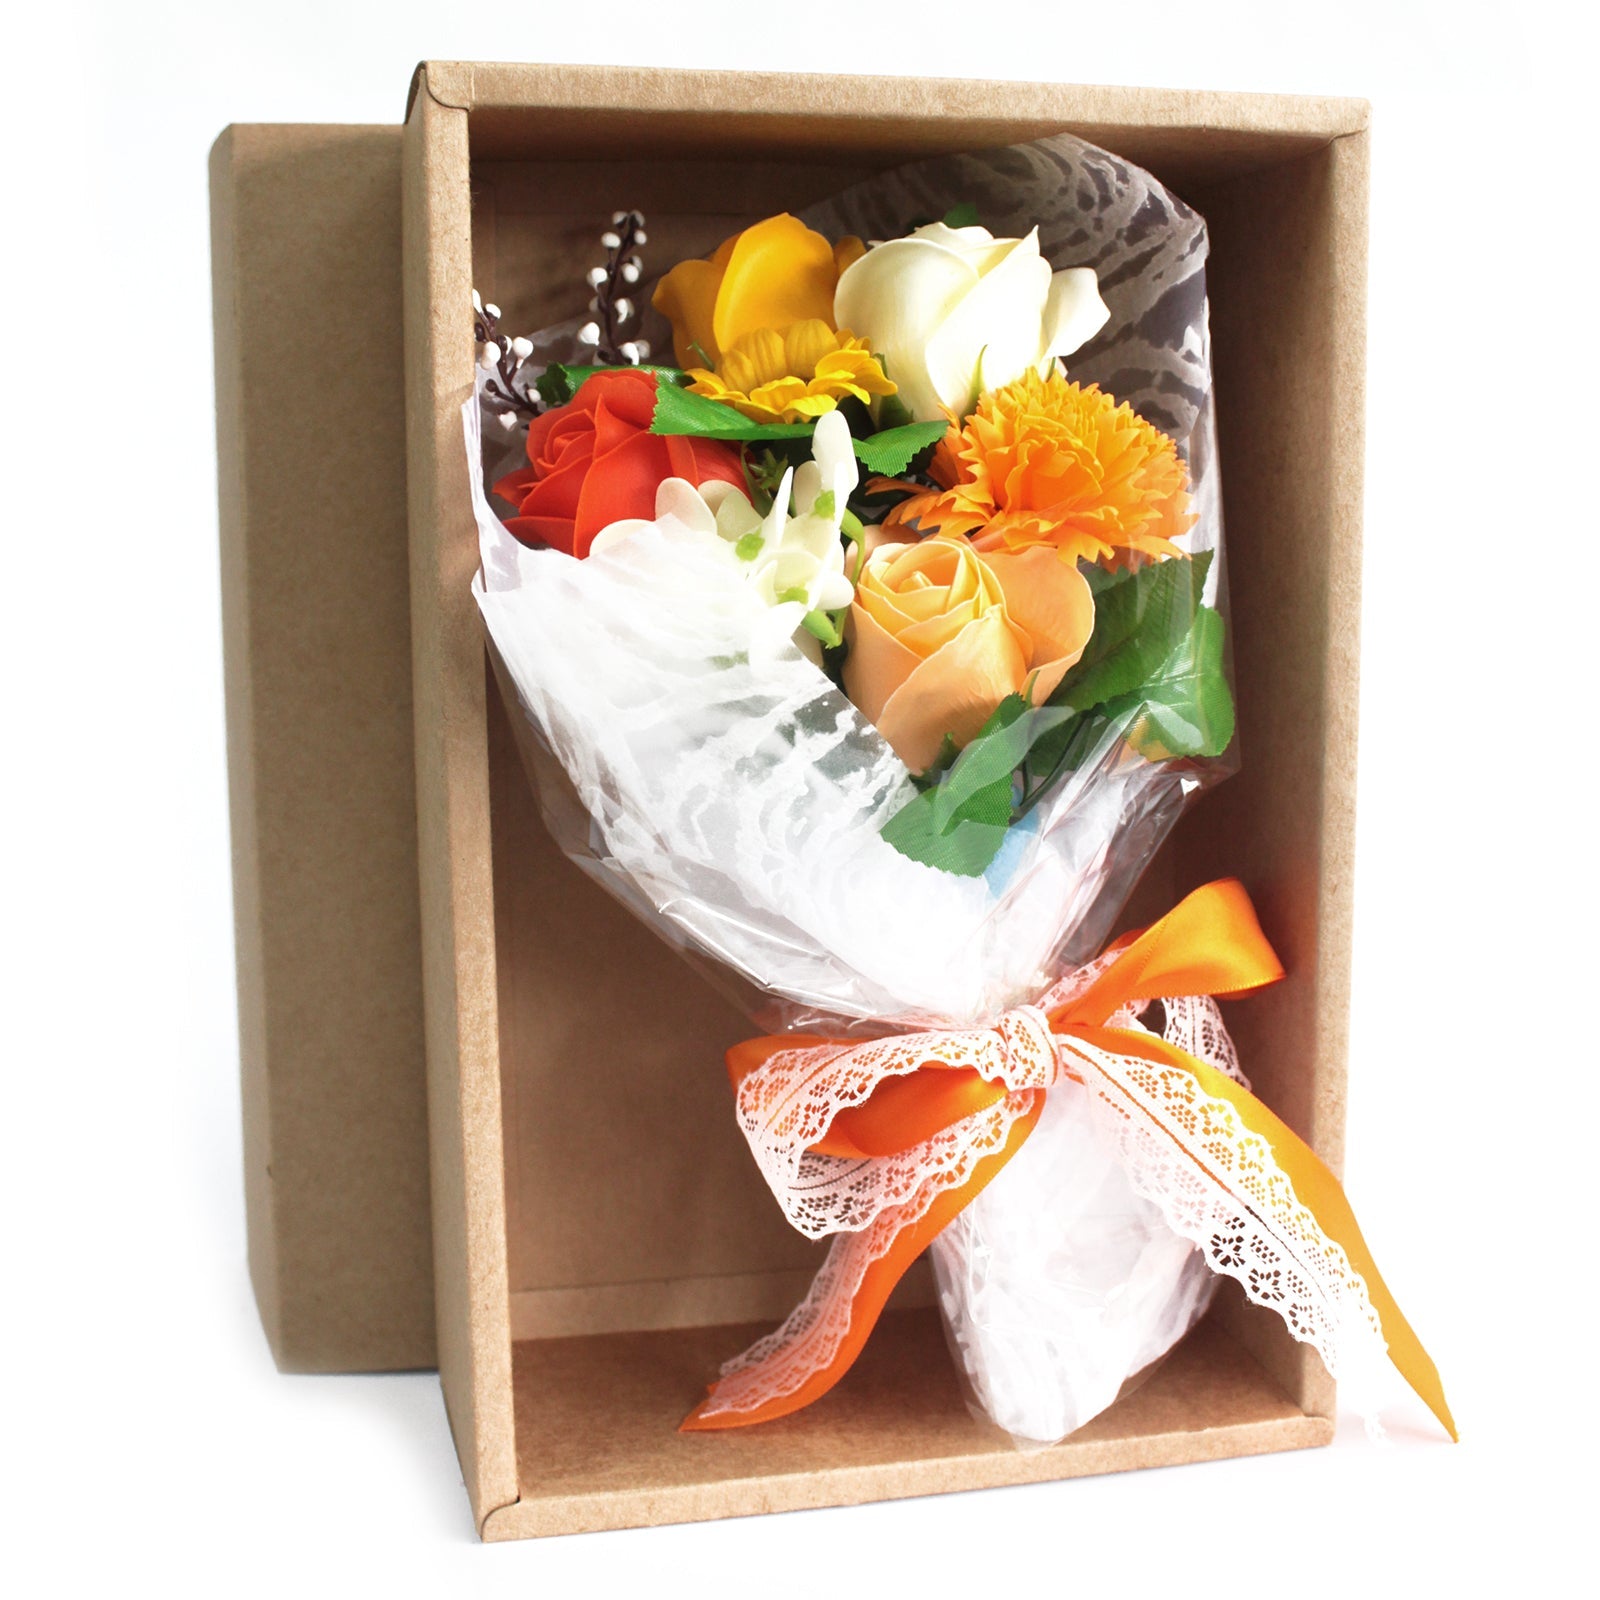 Flower Soap Bouquet - Gift Boxed Soap Flowers Soul Inspired Orange 